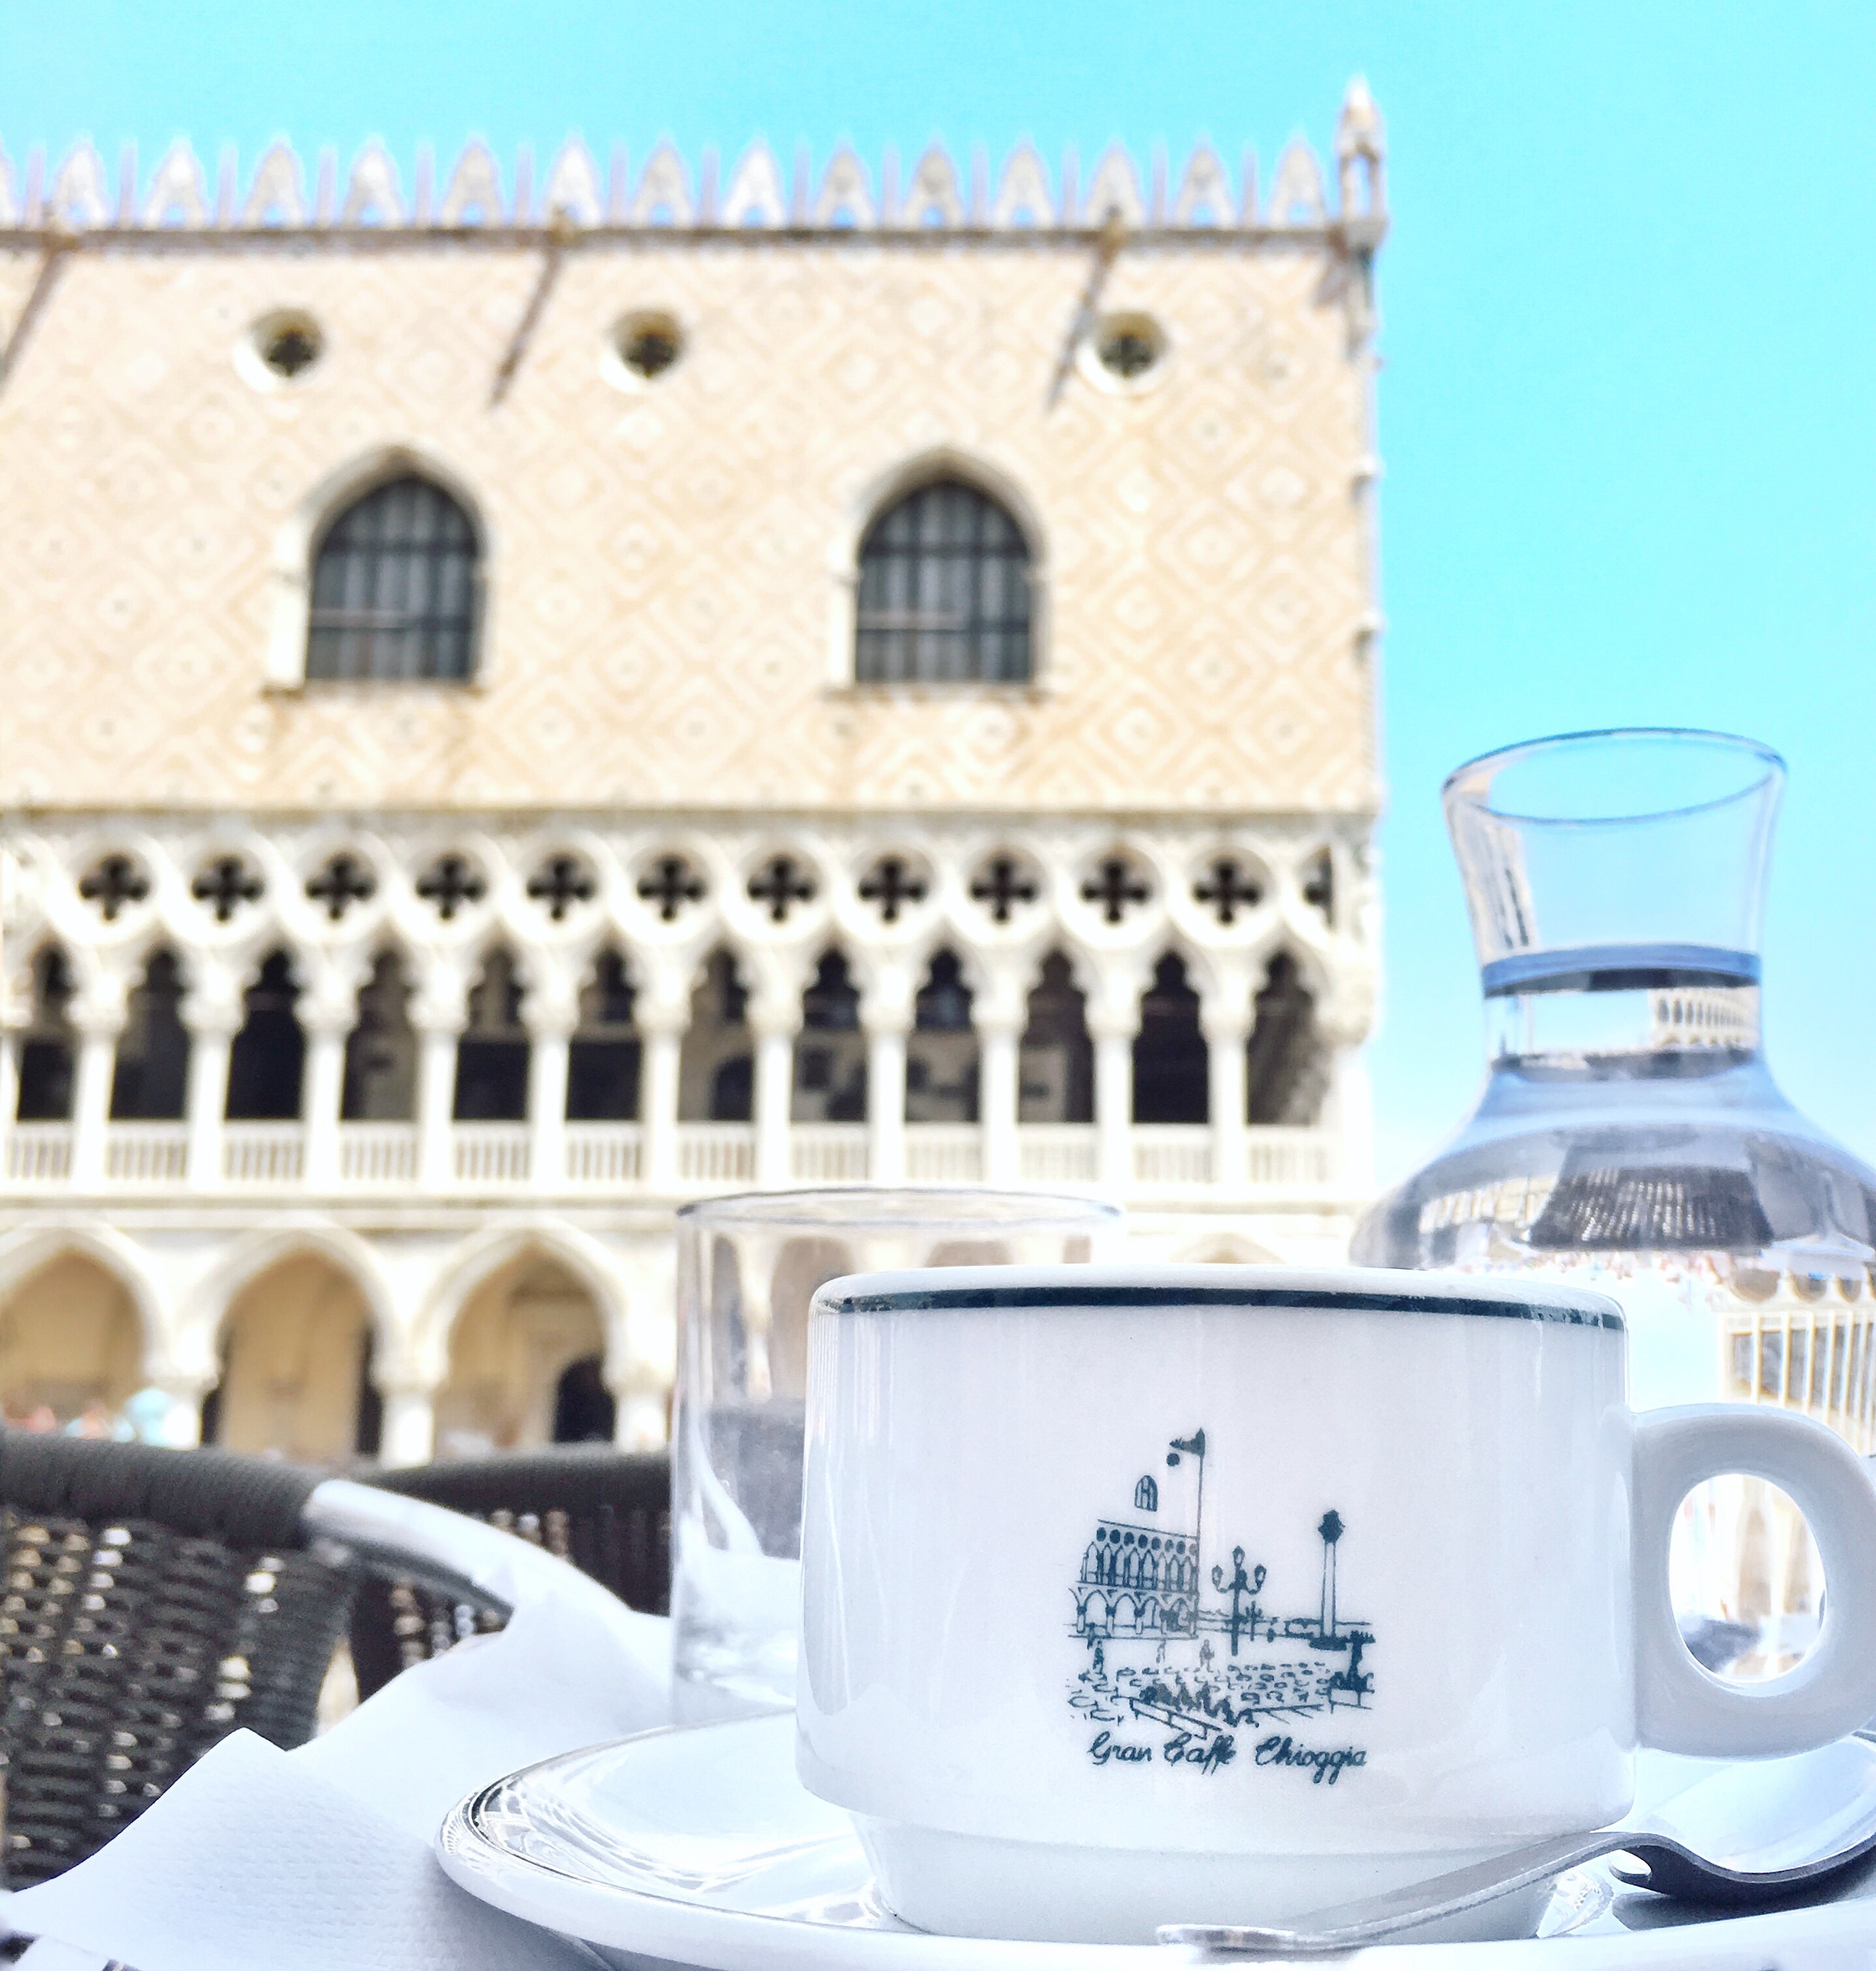 Gran Caffe Chioggia Venice Photo Diary 2016 | Bowtiful Life www.bowtifullife.com 13